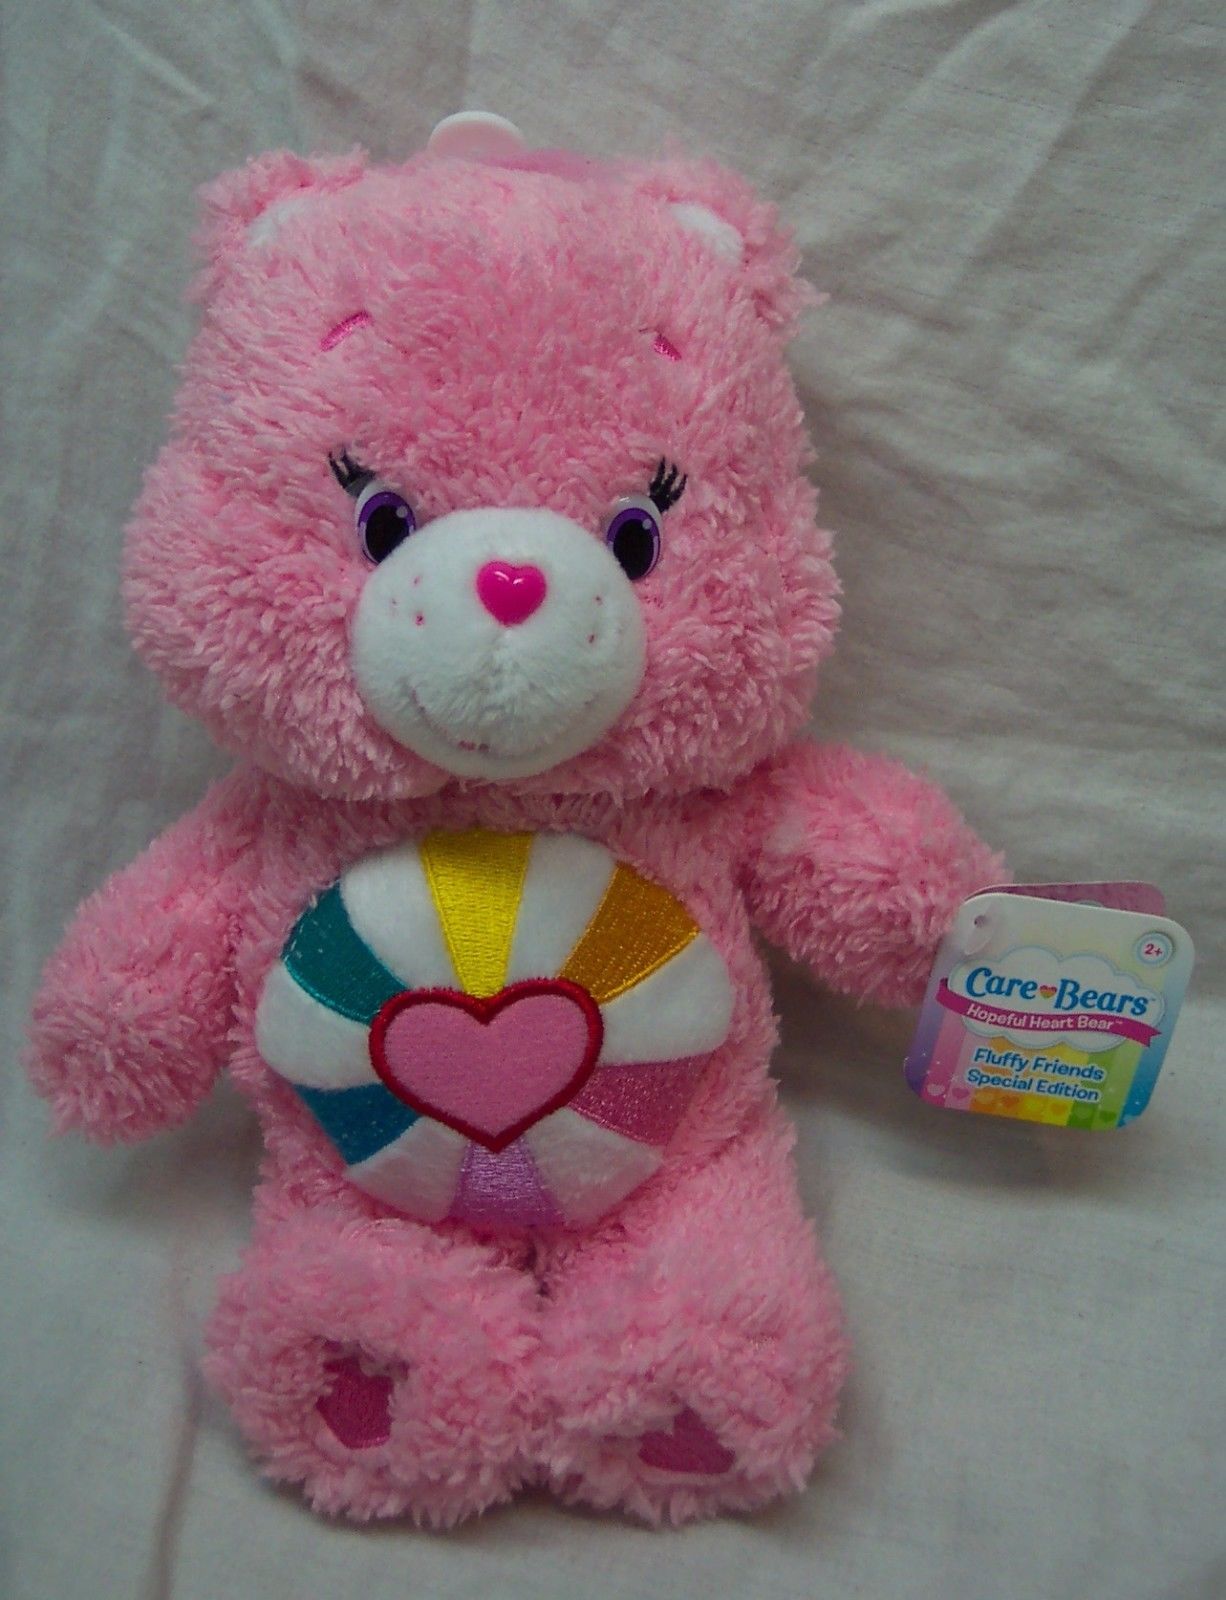 Care Bears Fluffy Friends PINK HOPEFUL HEART BEAR 8